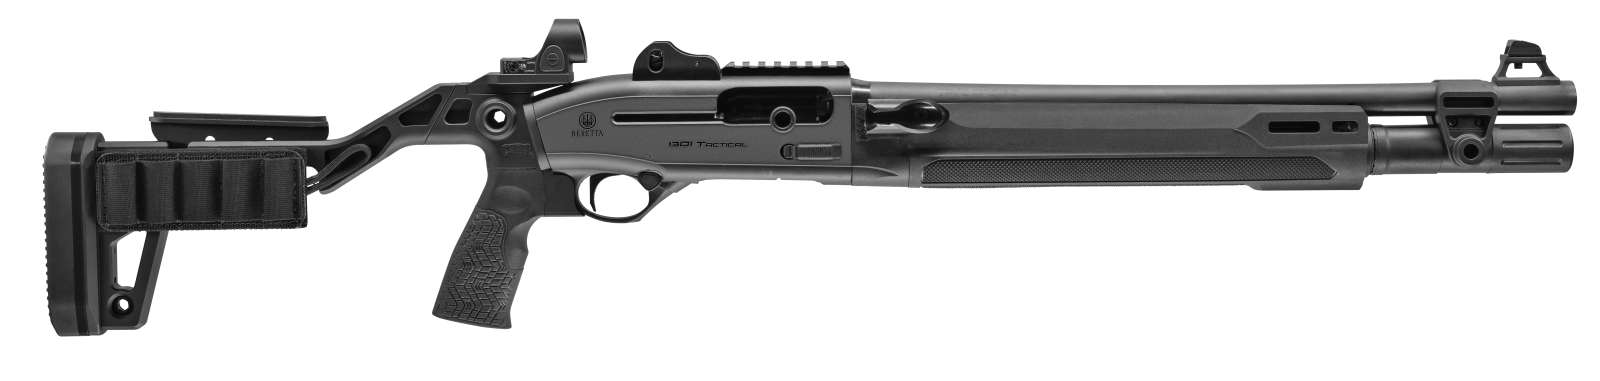 https://cityarsenal.com/product/beretta-1301-tactical-mod-2-semi-auto-12-gauge-3-chamber-fixed-sights-matte-black-j131m2pc18/